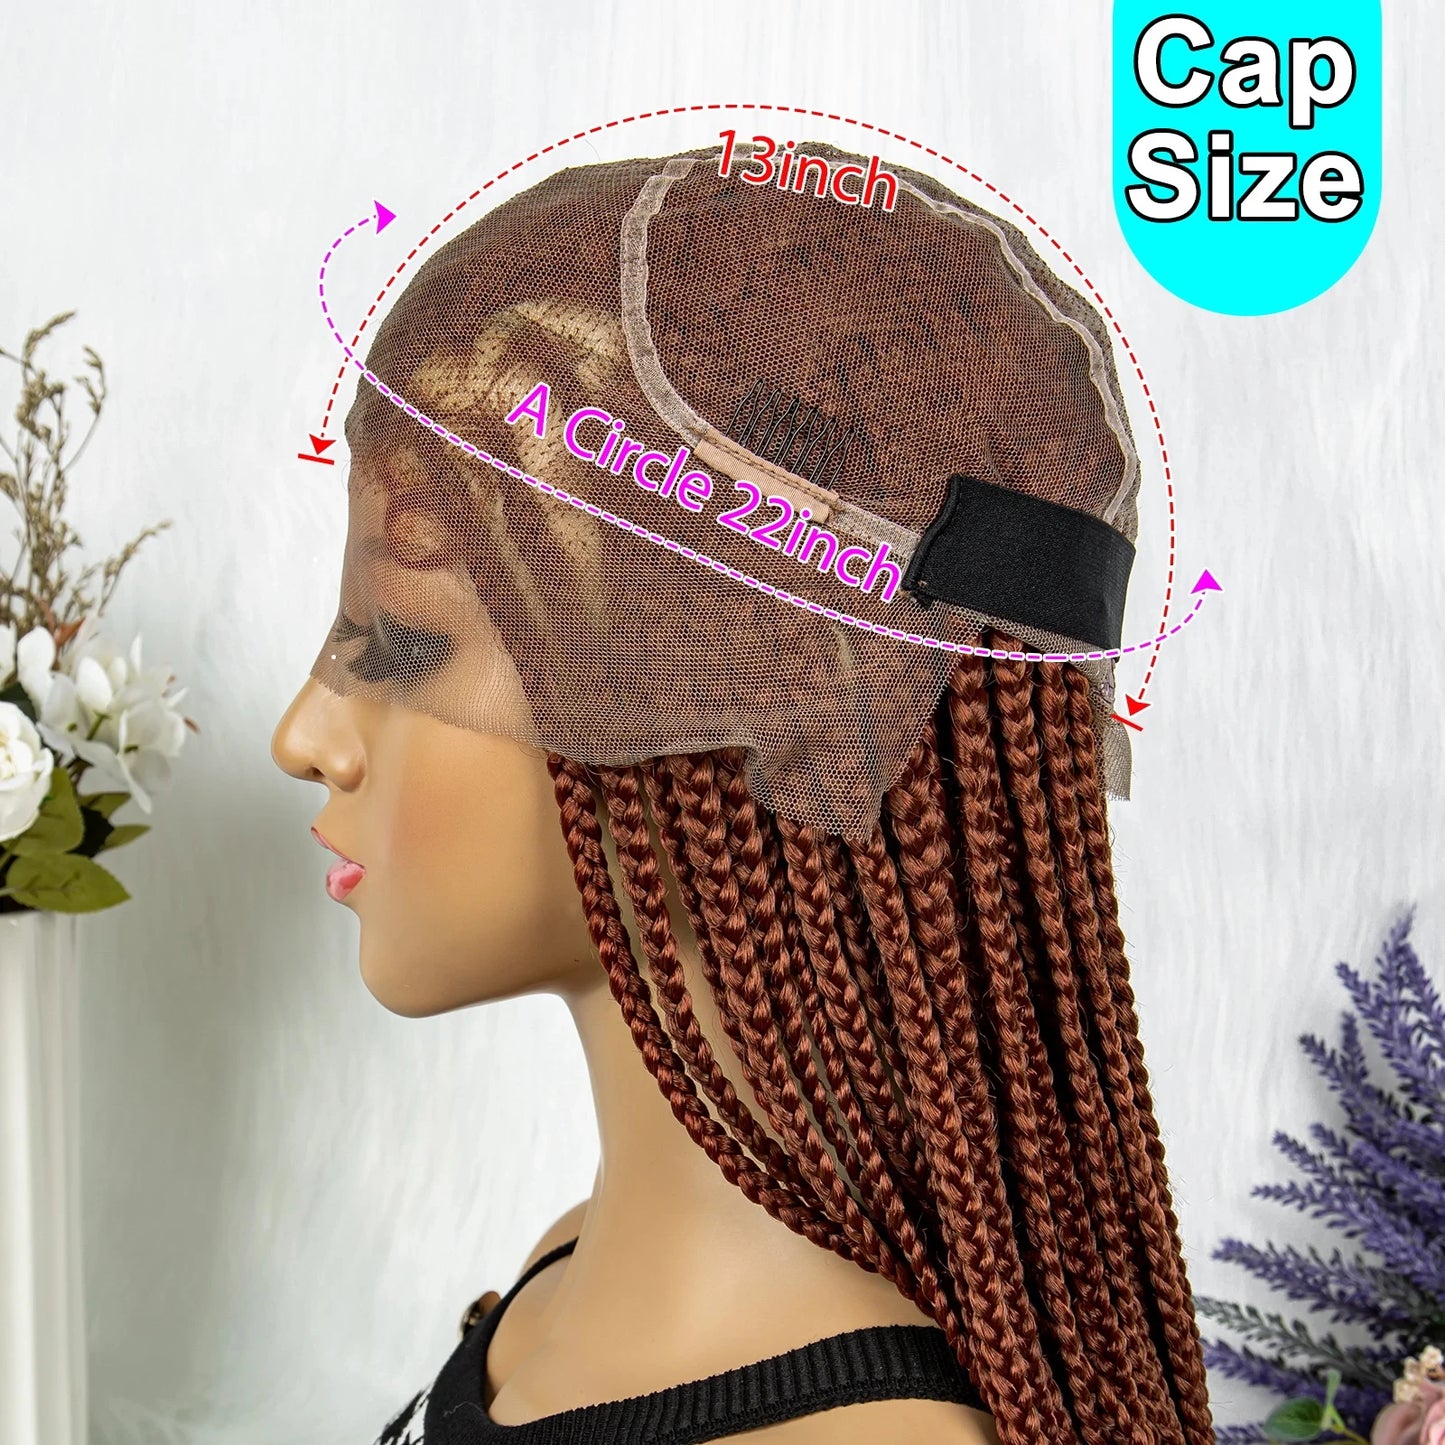 Braided Transparent HD Full Lace Wig, Crochet Braid Braiding Hair Knotless Box Cornrow Braided Wig